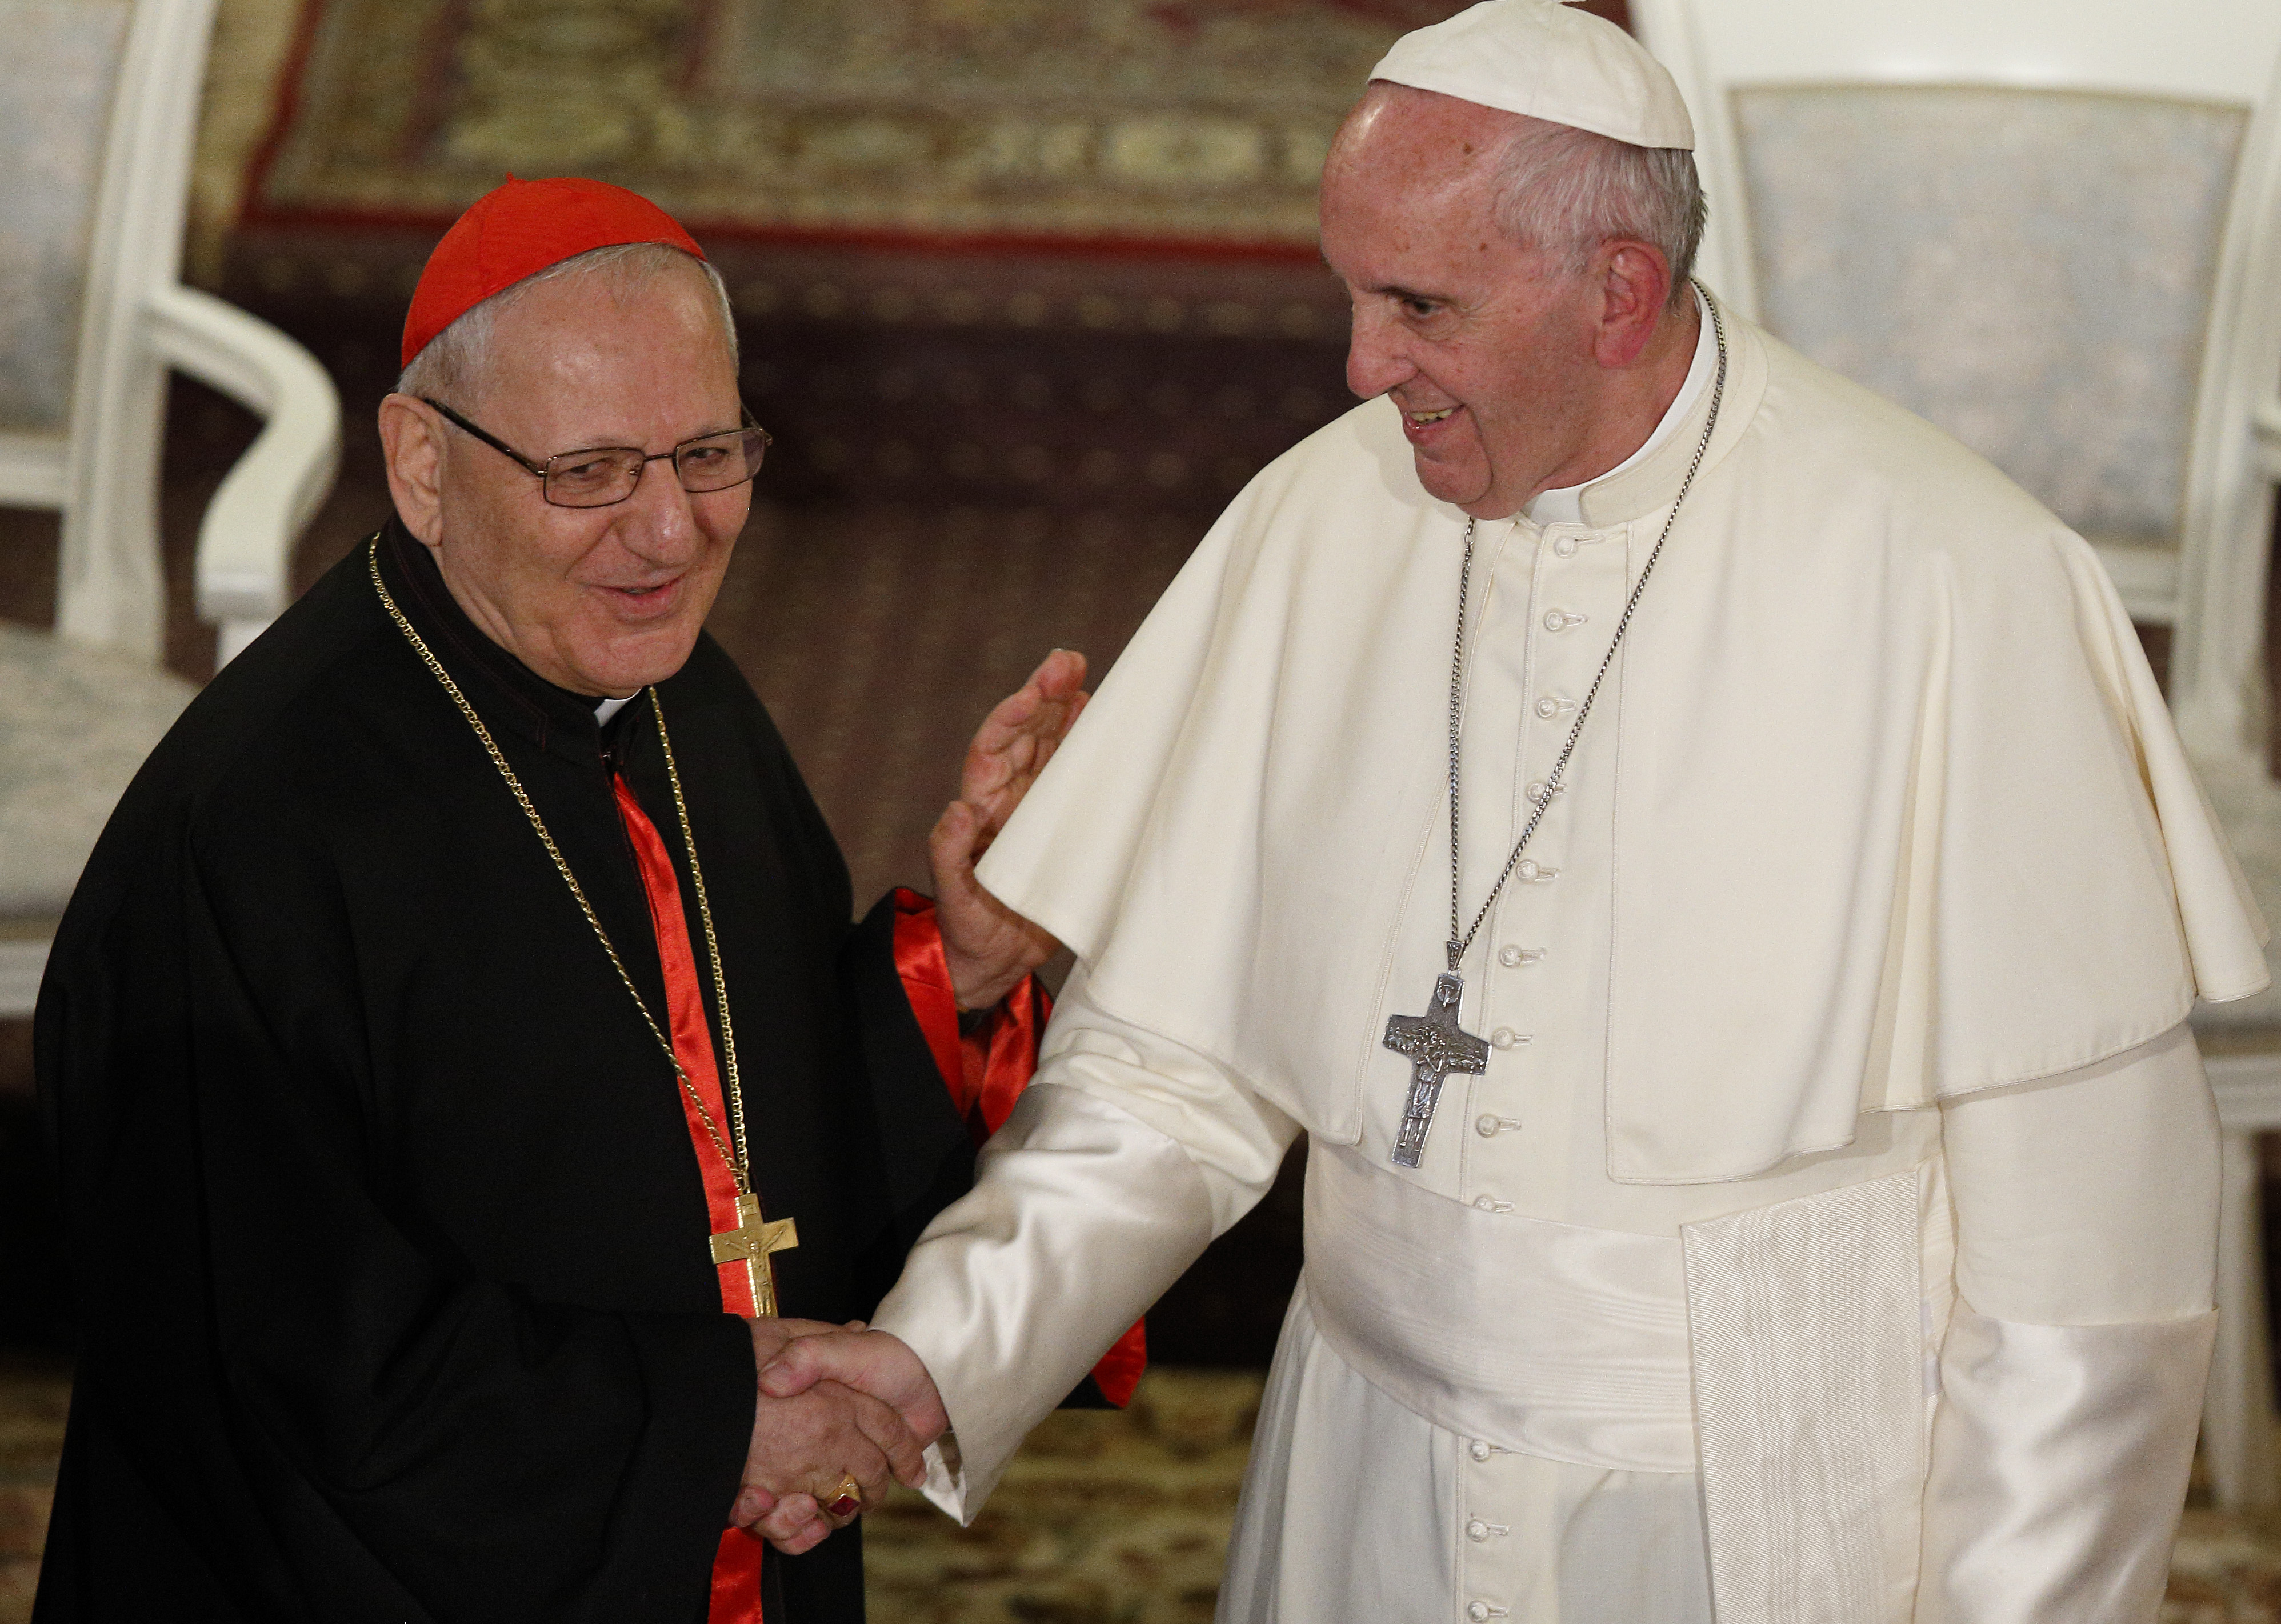  New Chaldean Catholic cardinal praised as 'courageous voice'